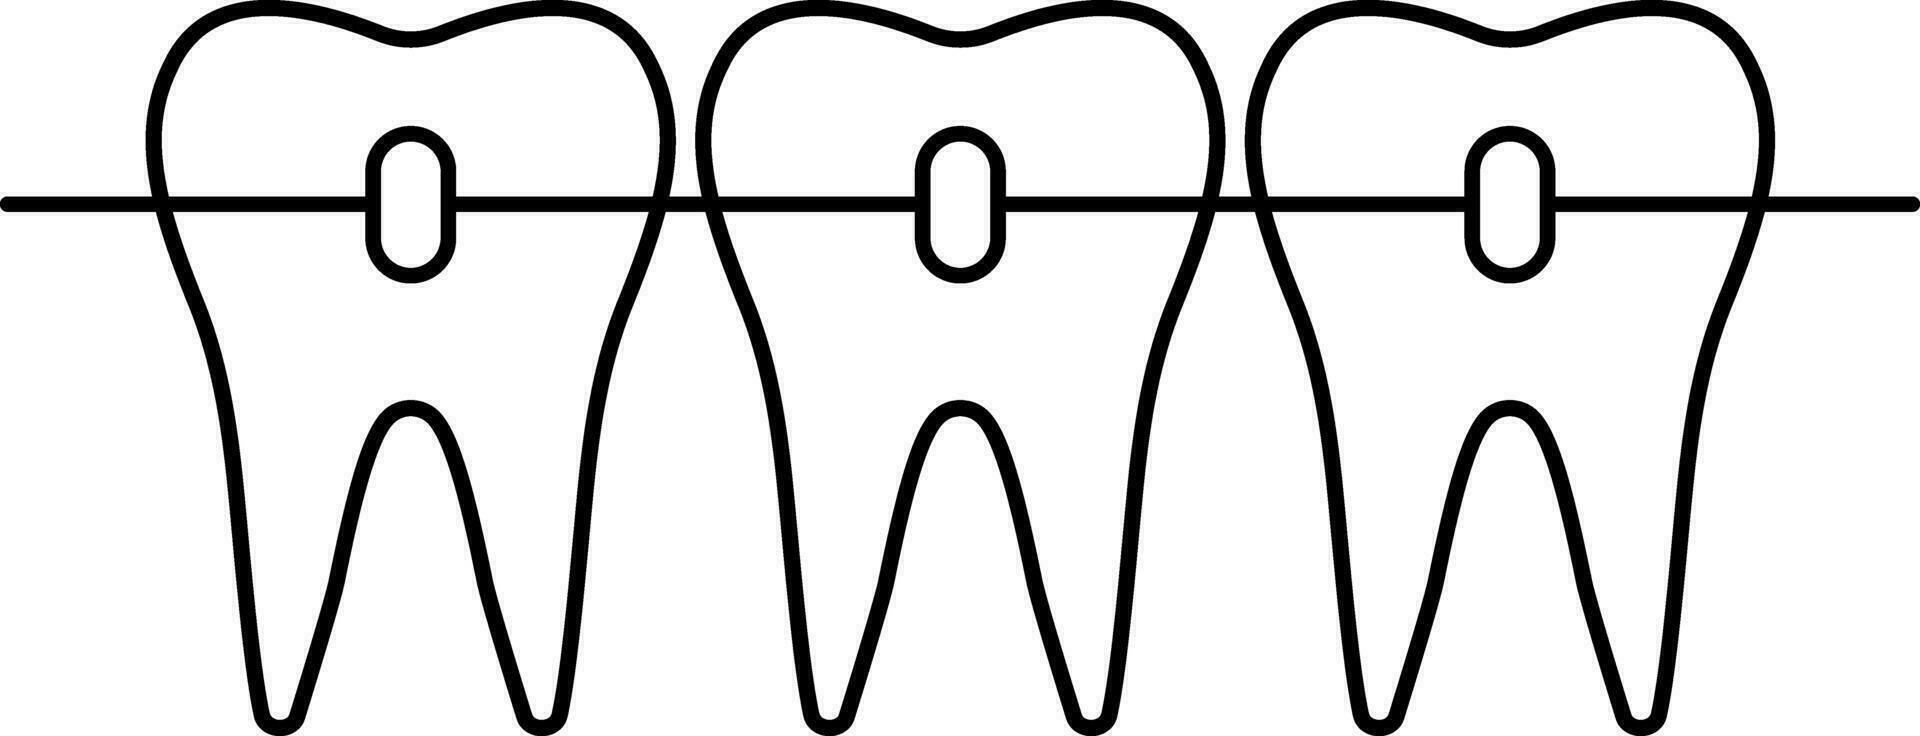 Dental braces icon, orthodontic teeth alignment beautiful smile vector